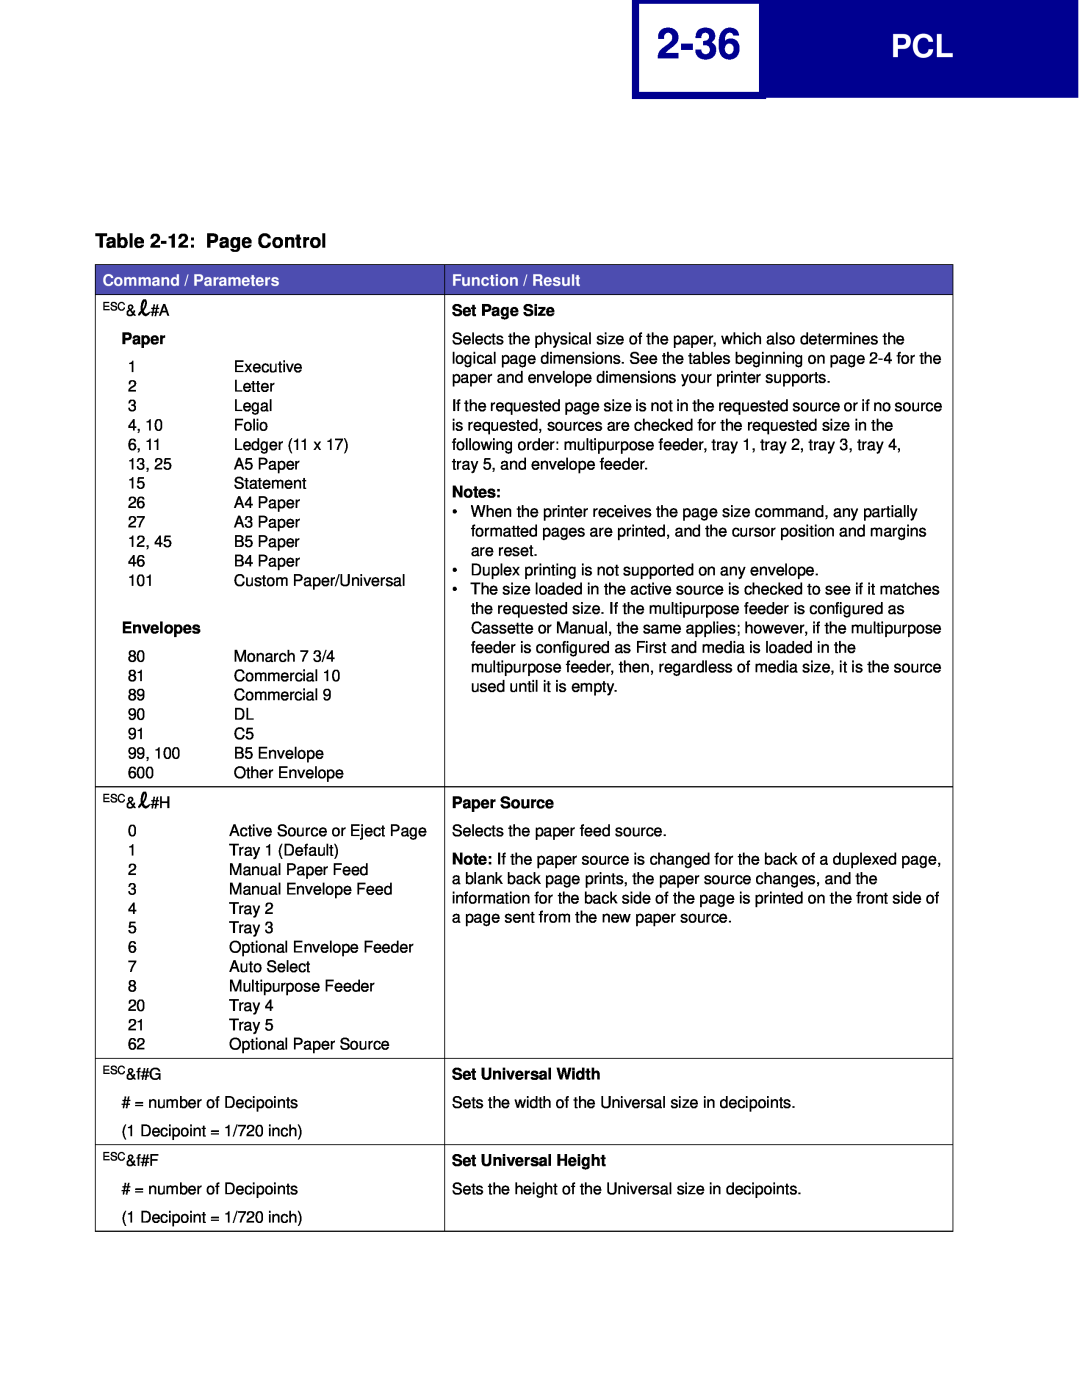 Lexmark C760 2-36, 12 Page Control, Set Page Size, Envelopes, Paper Source, Set Universal Width, Set Universal Height 